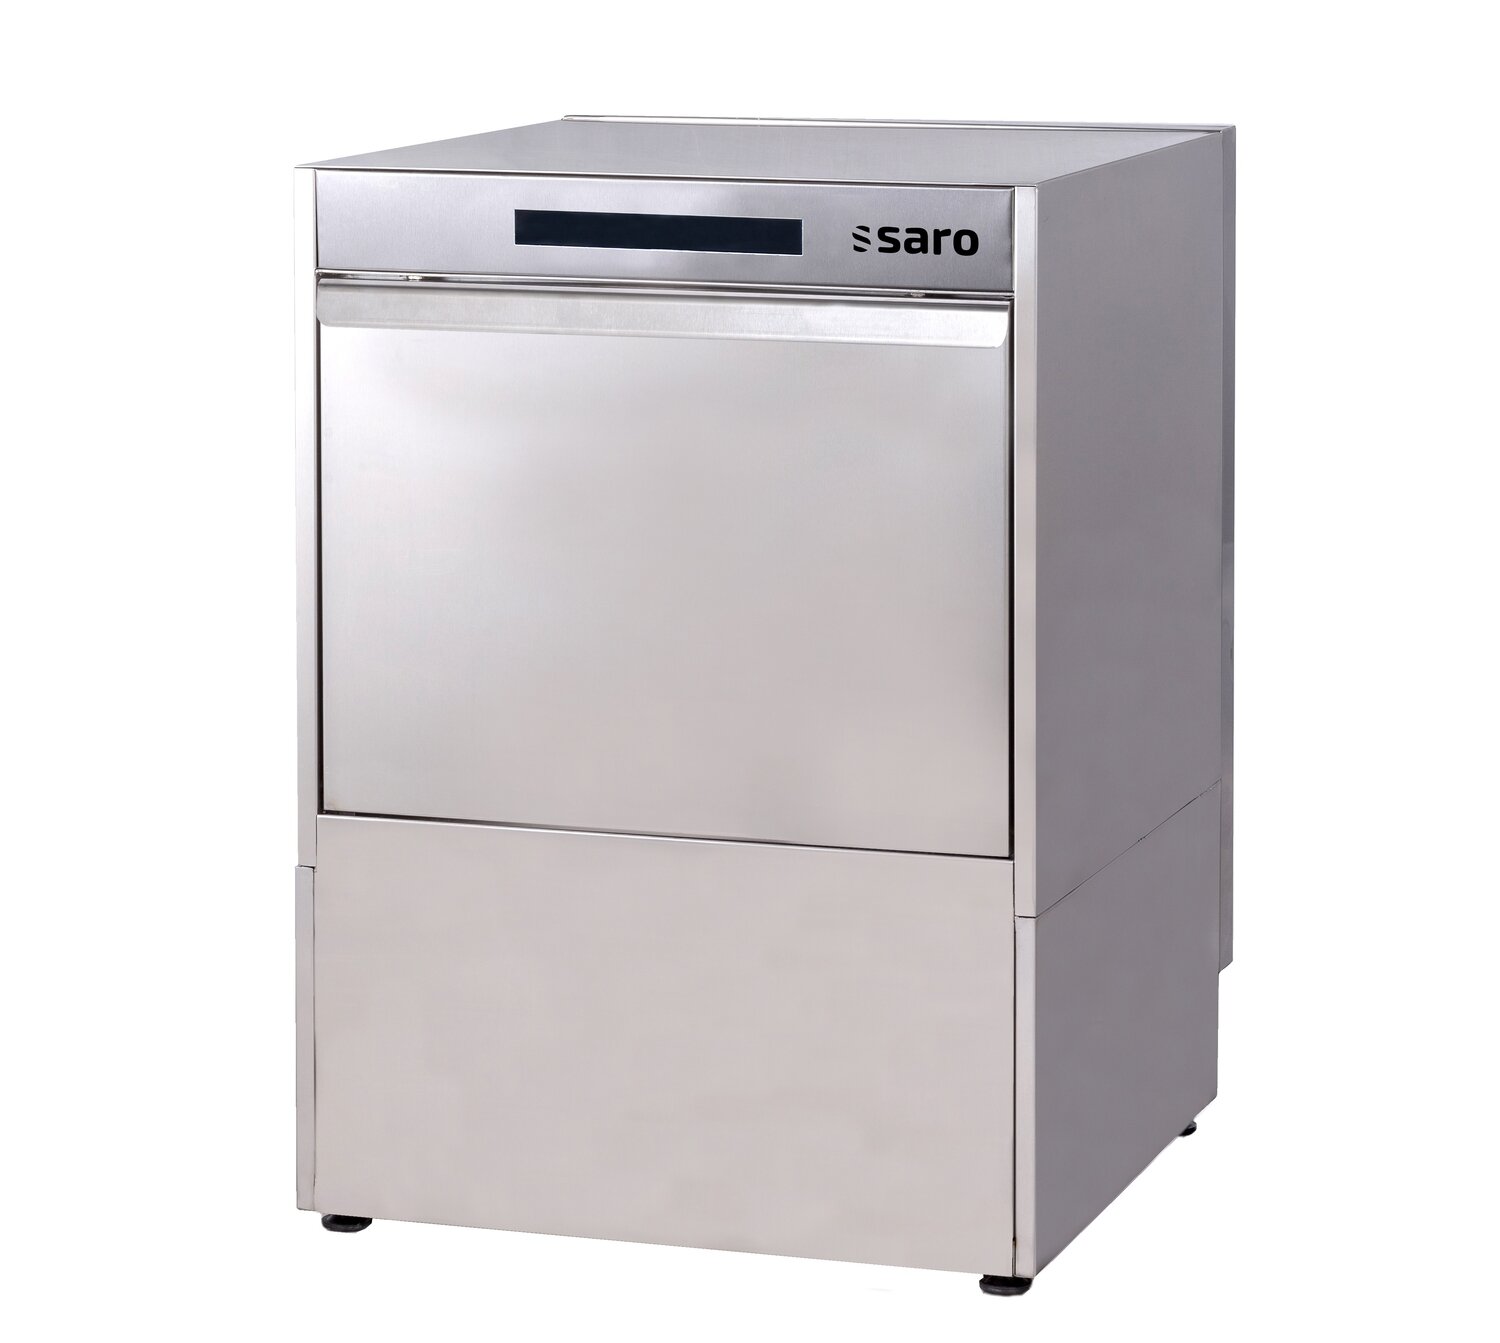 SARO Digital, double-walled dishwasher model HEIDELBERG (digital)